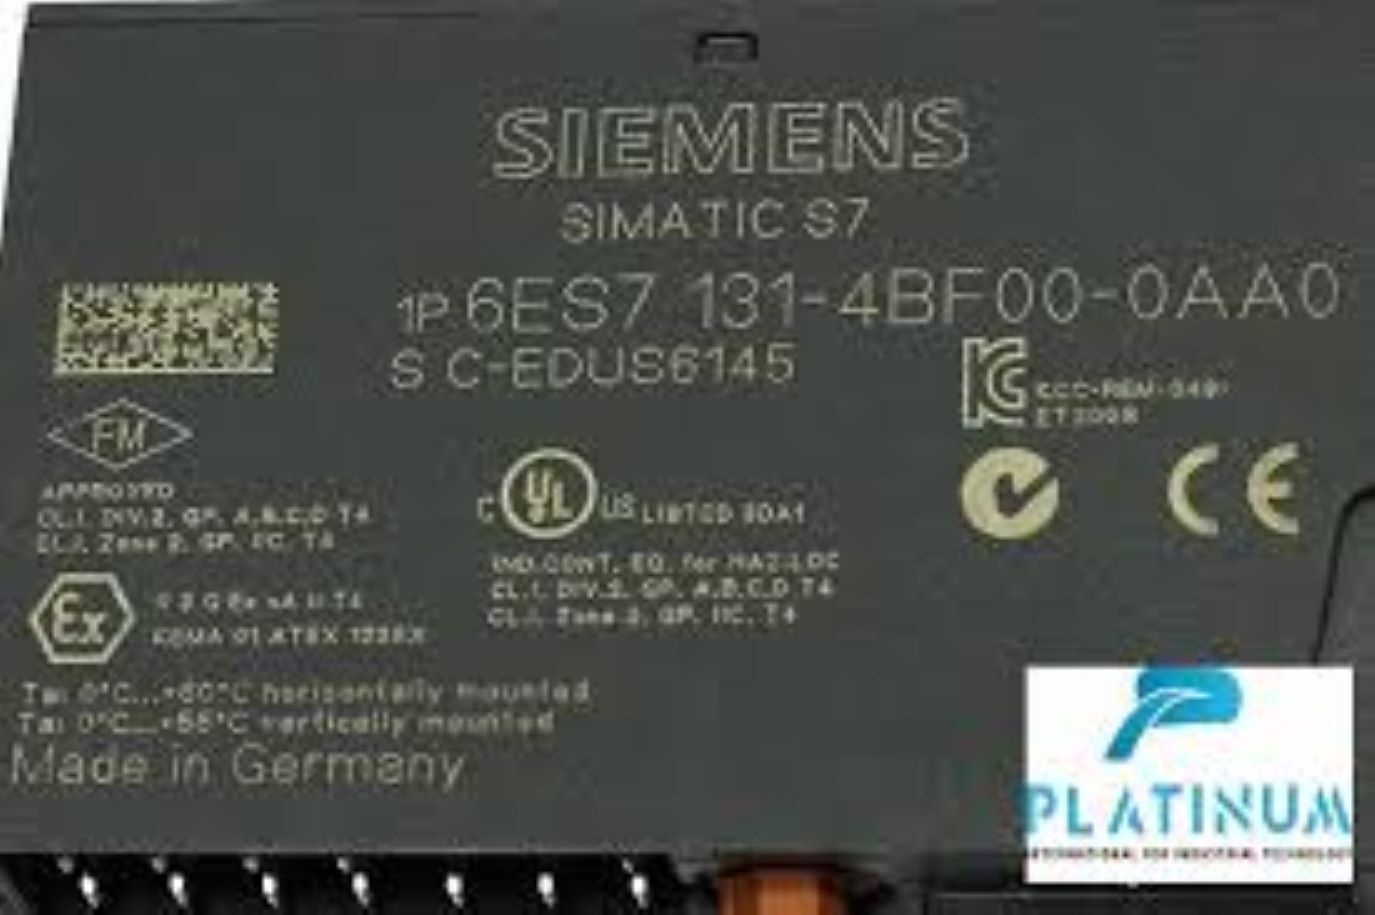 6ES7 131 4BF000AA0- Siemens programmable logic controller